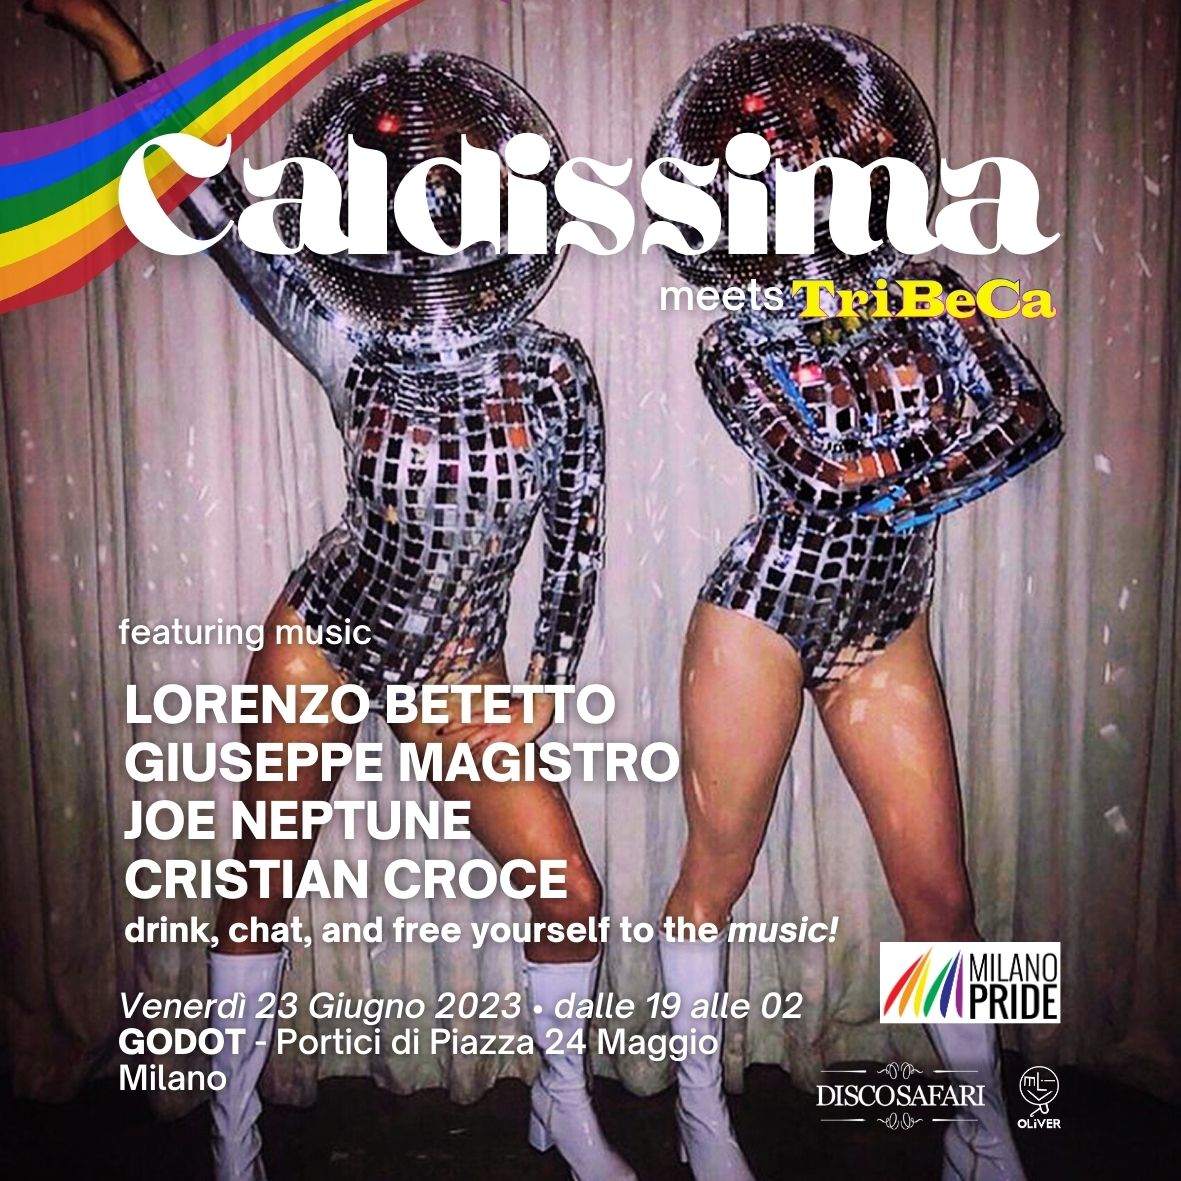 Milano Pride: CALDISSIMA meets TRIBECA - フライヤー表